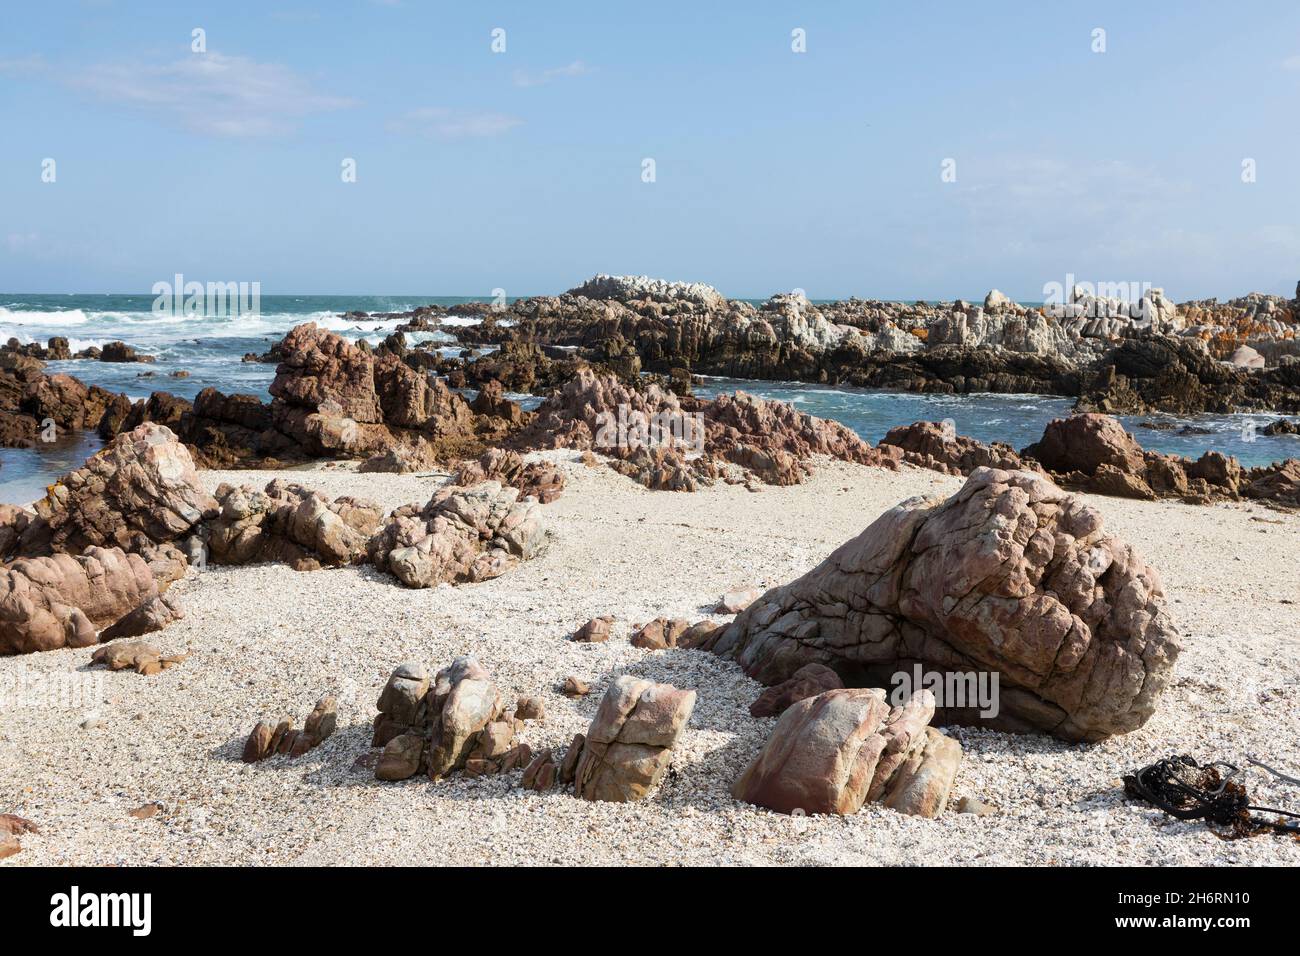 Sand and shingle beach with jagged rocks, on the Atlantic coast. Stock Photo